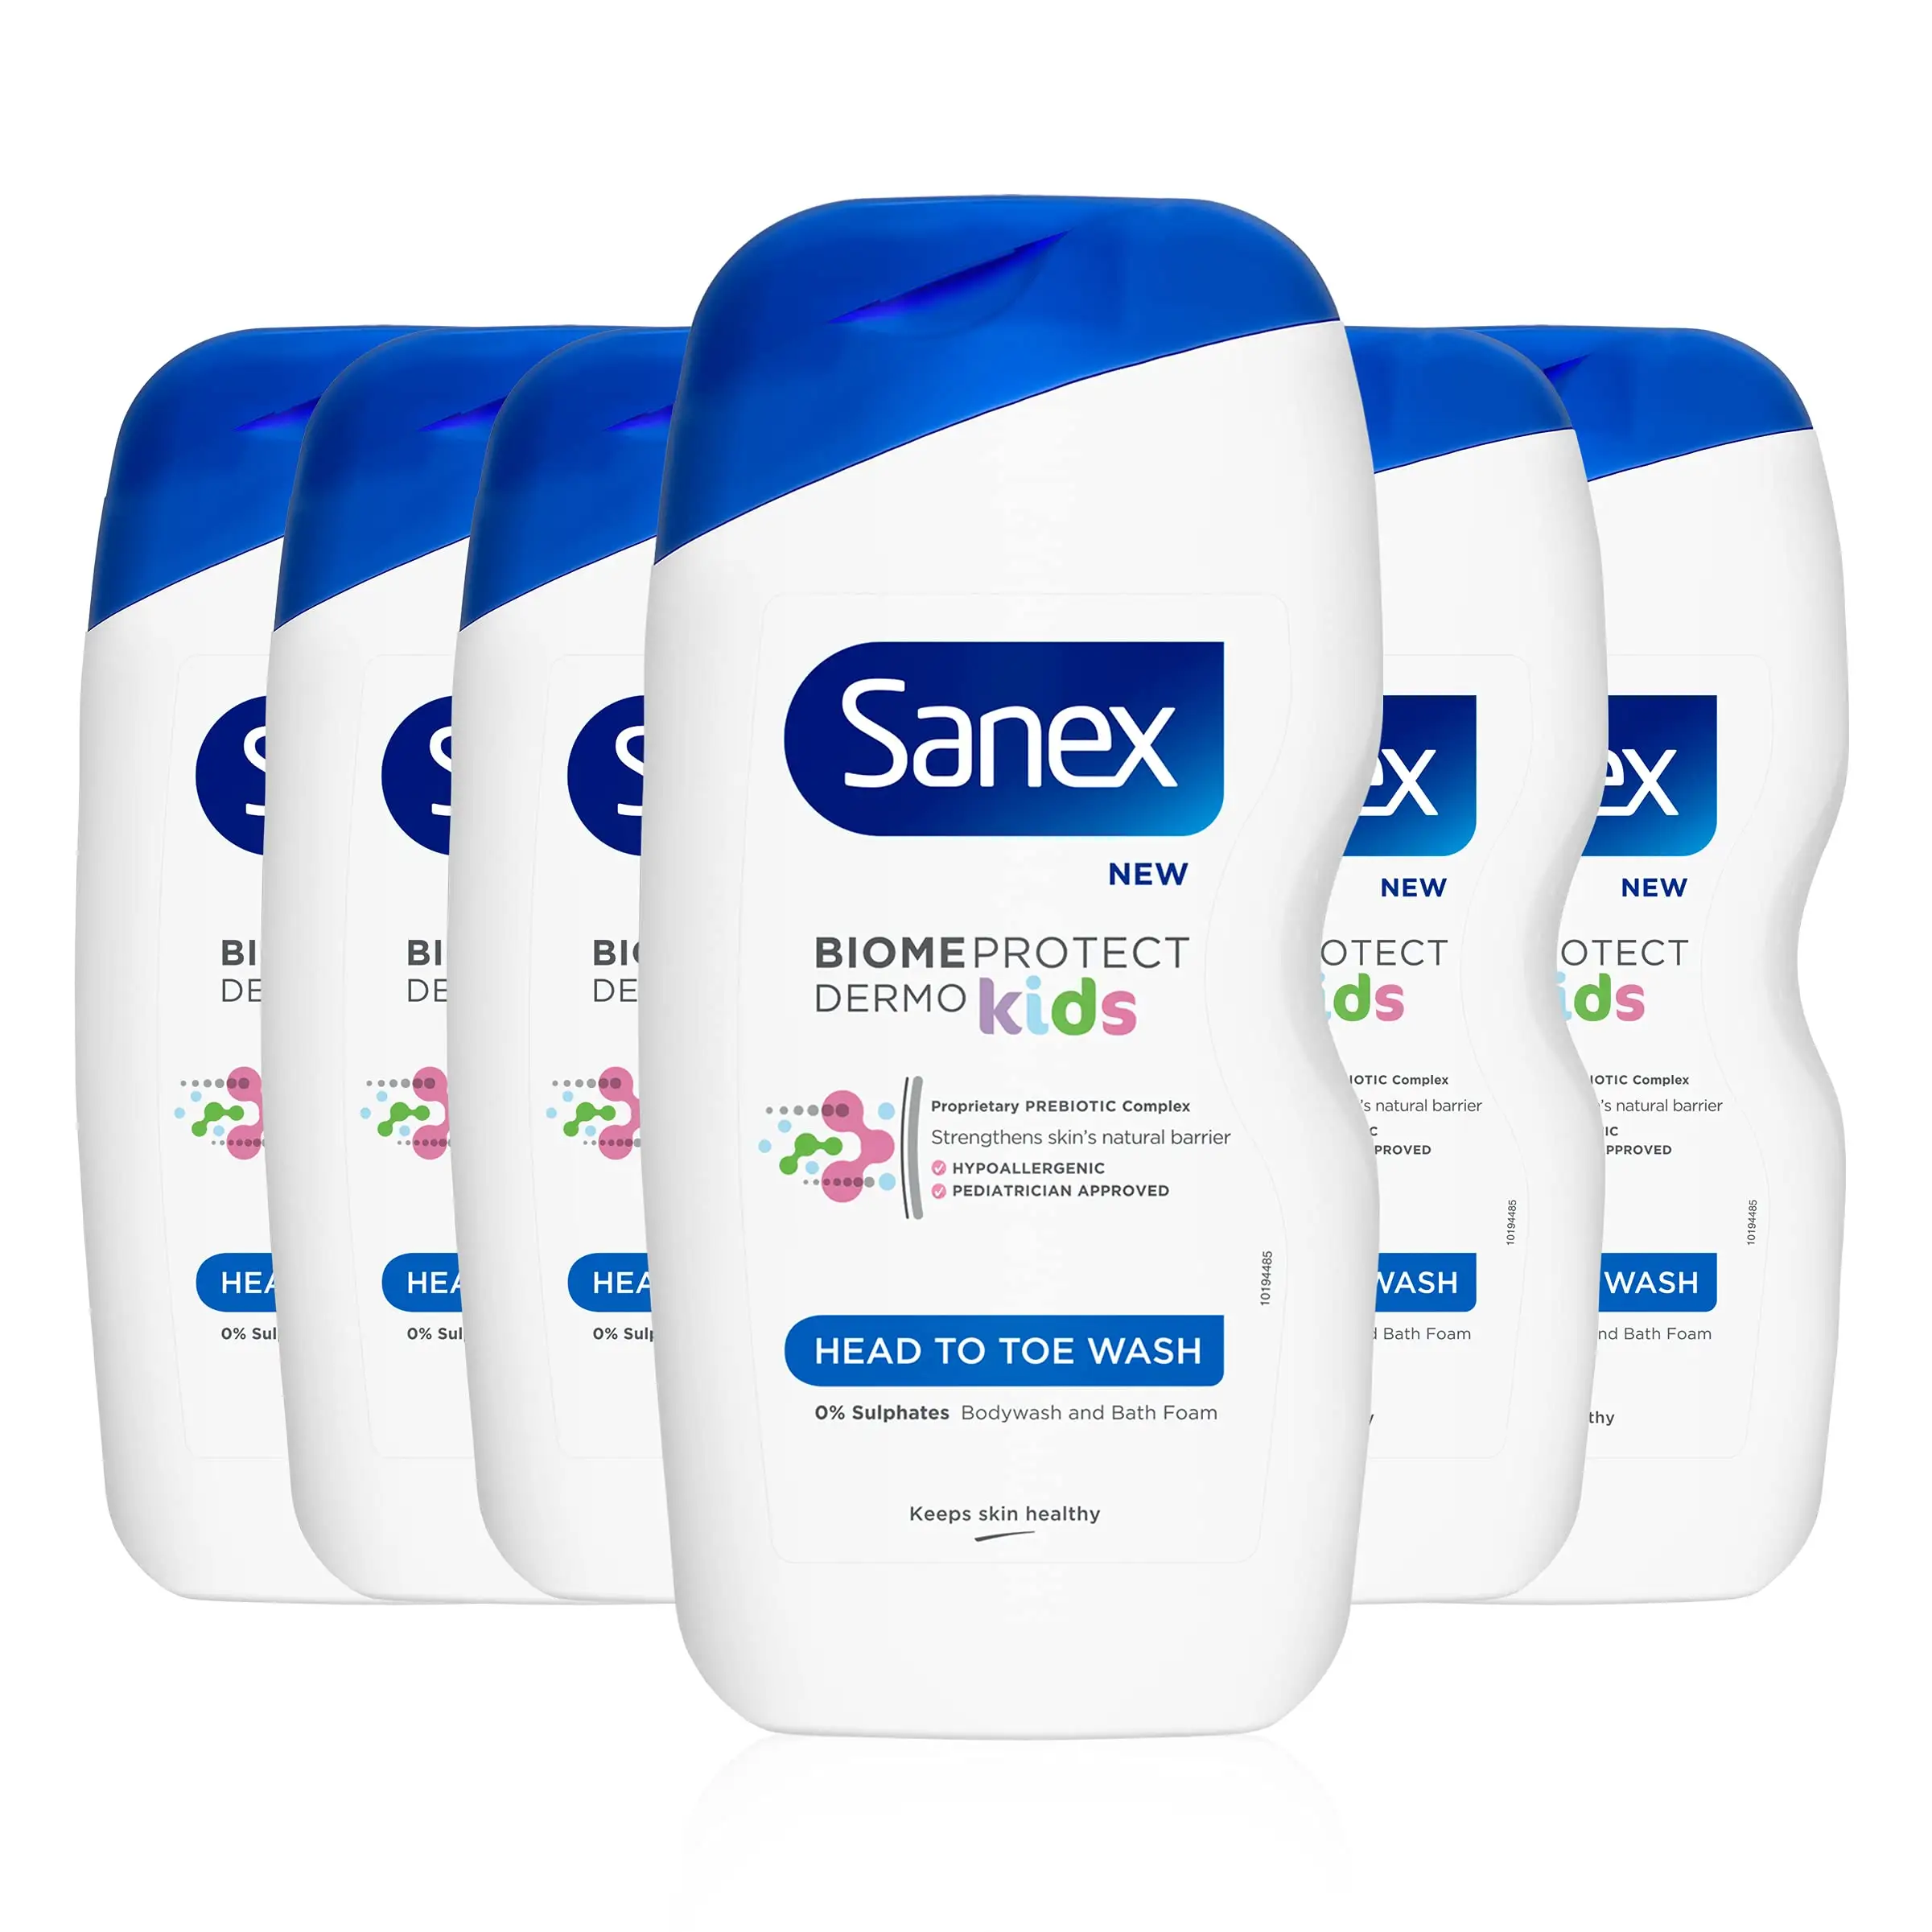 Sanex BiomeProtect 키즈 헤드 투 토 워시 450ml 팩 6 개, 모발 및 섬세한 피부를 부드럽게 클렌징